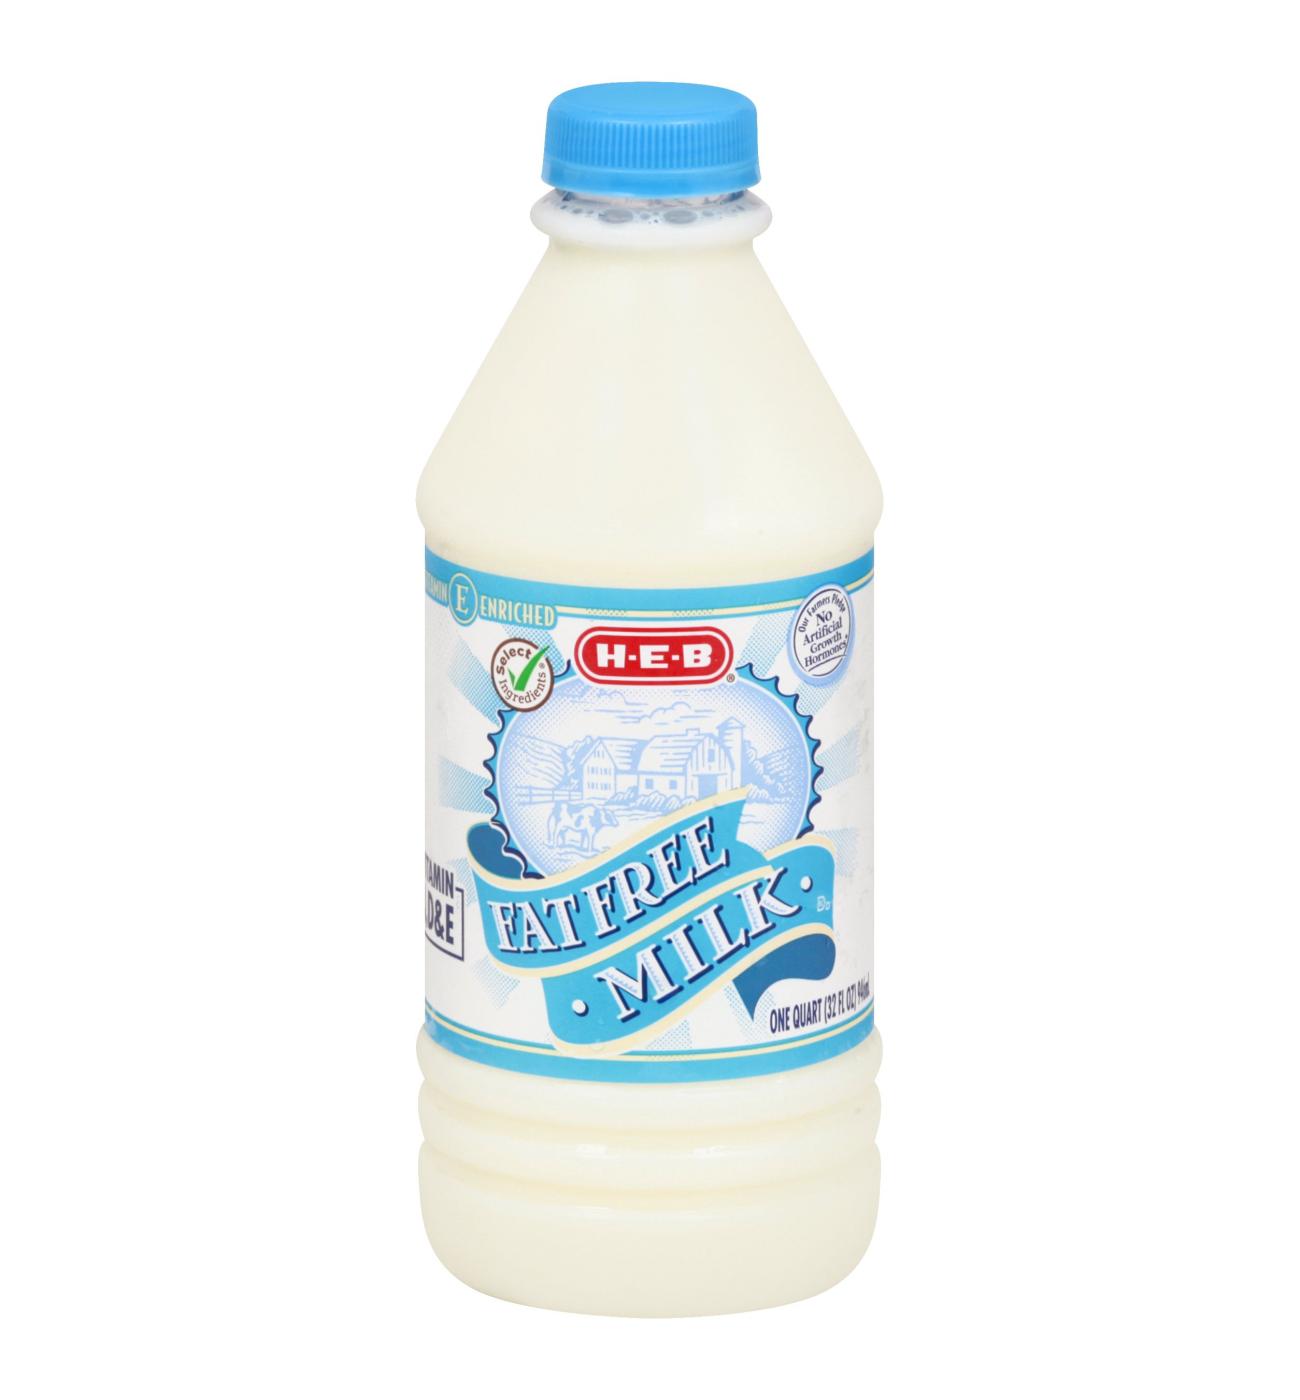 H-E-B Fat Free Milk; image 1 of 2